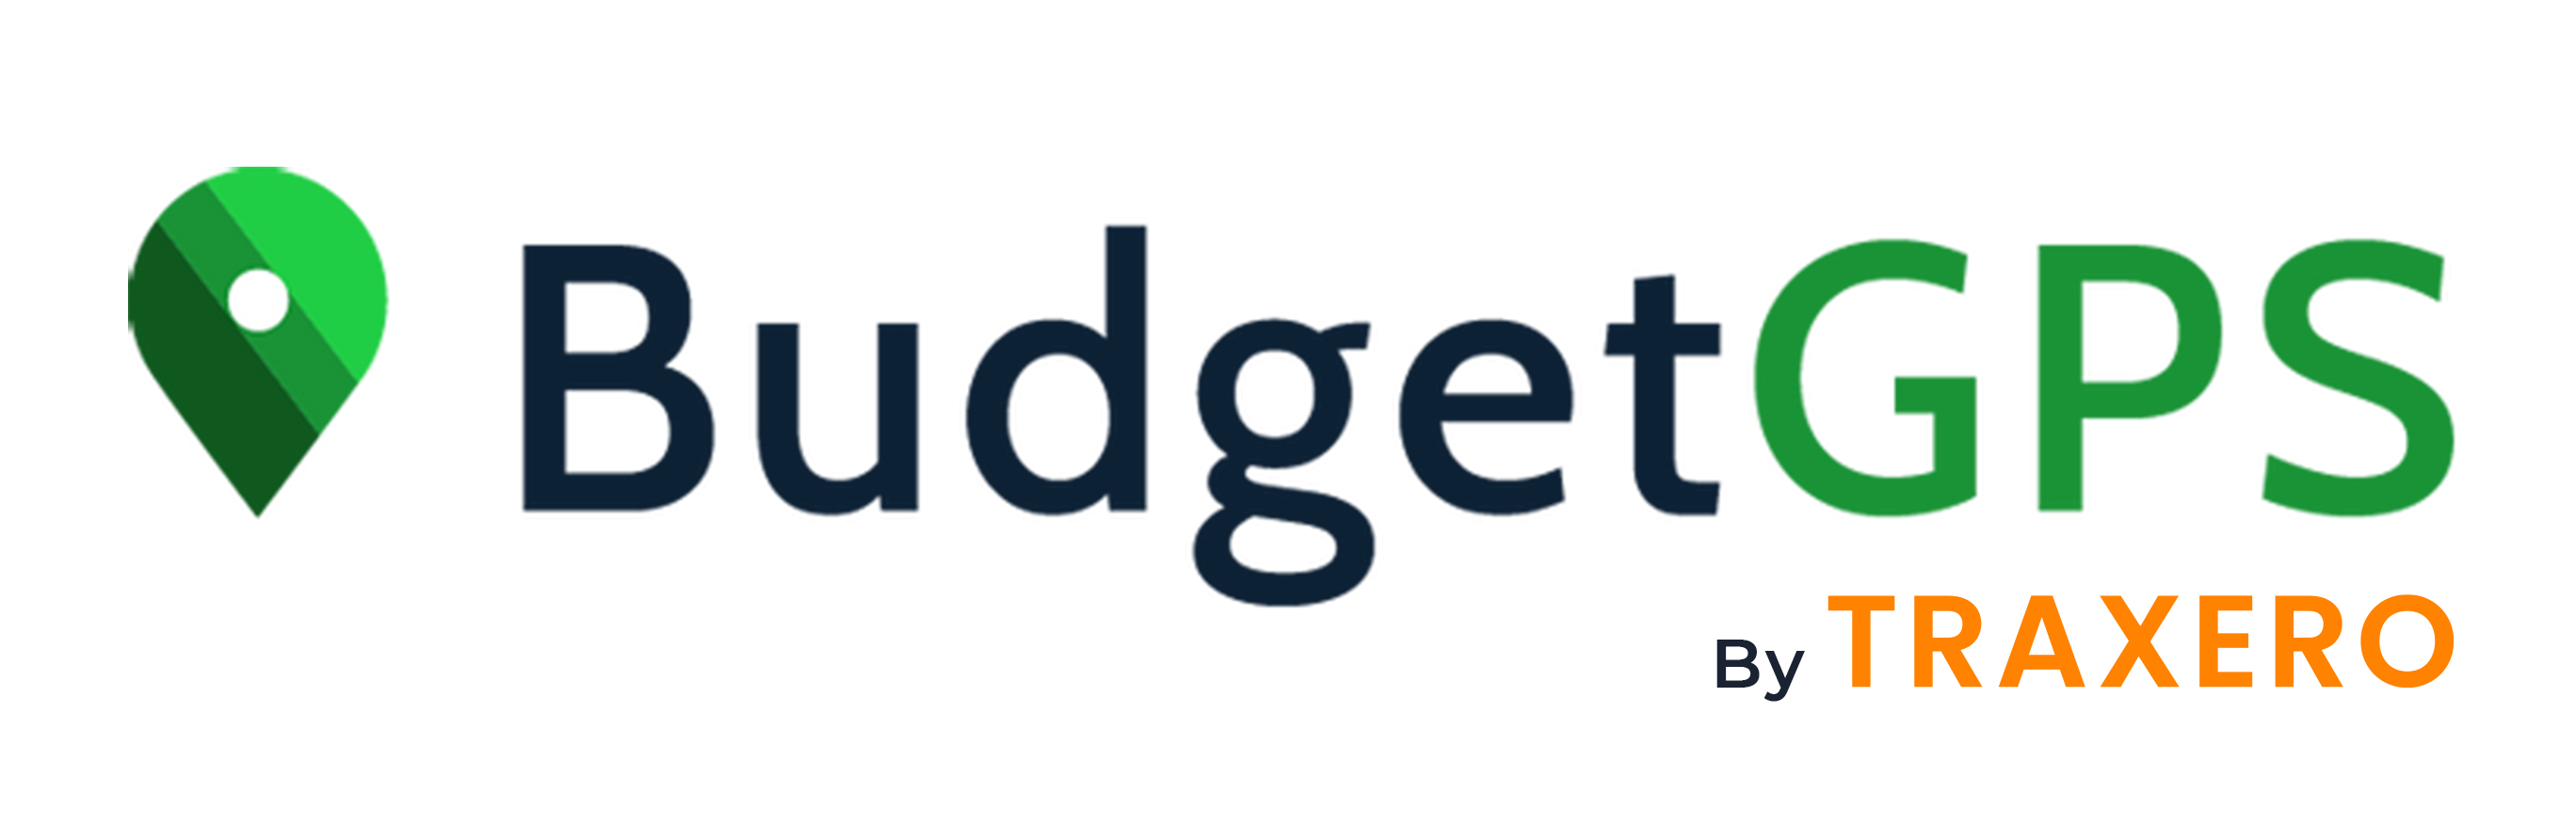 Budget_gps_bytraxero_web_2.1_Logo.png